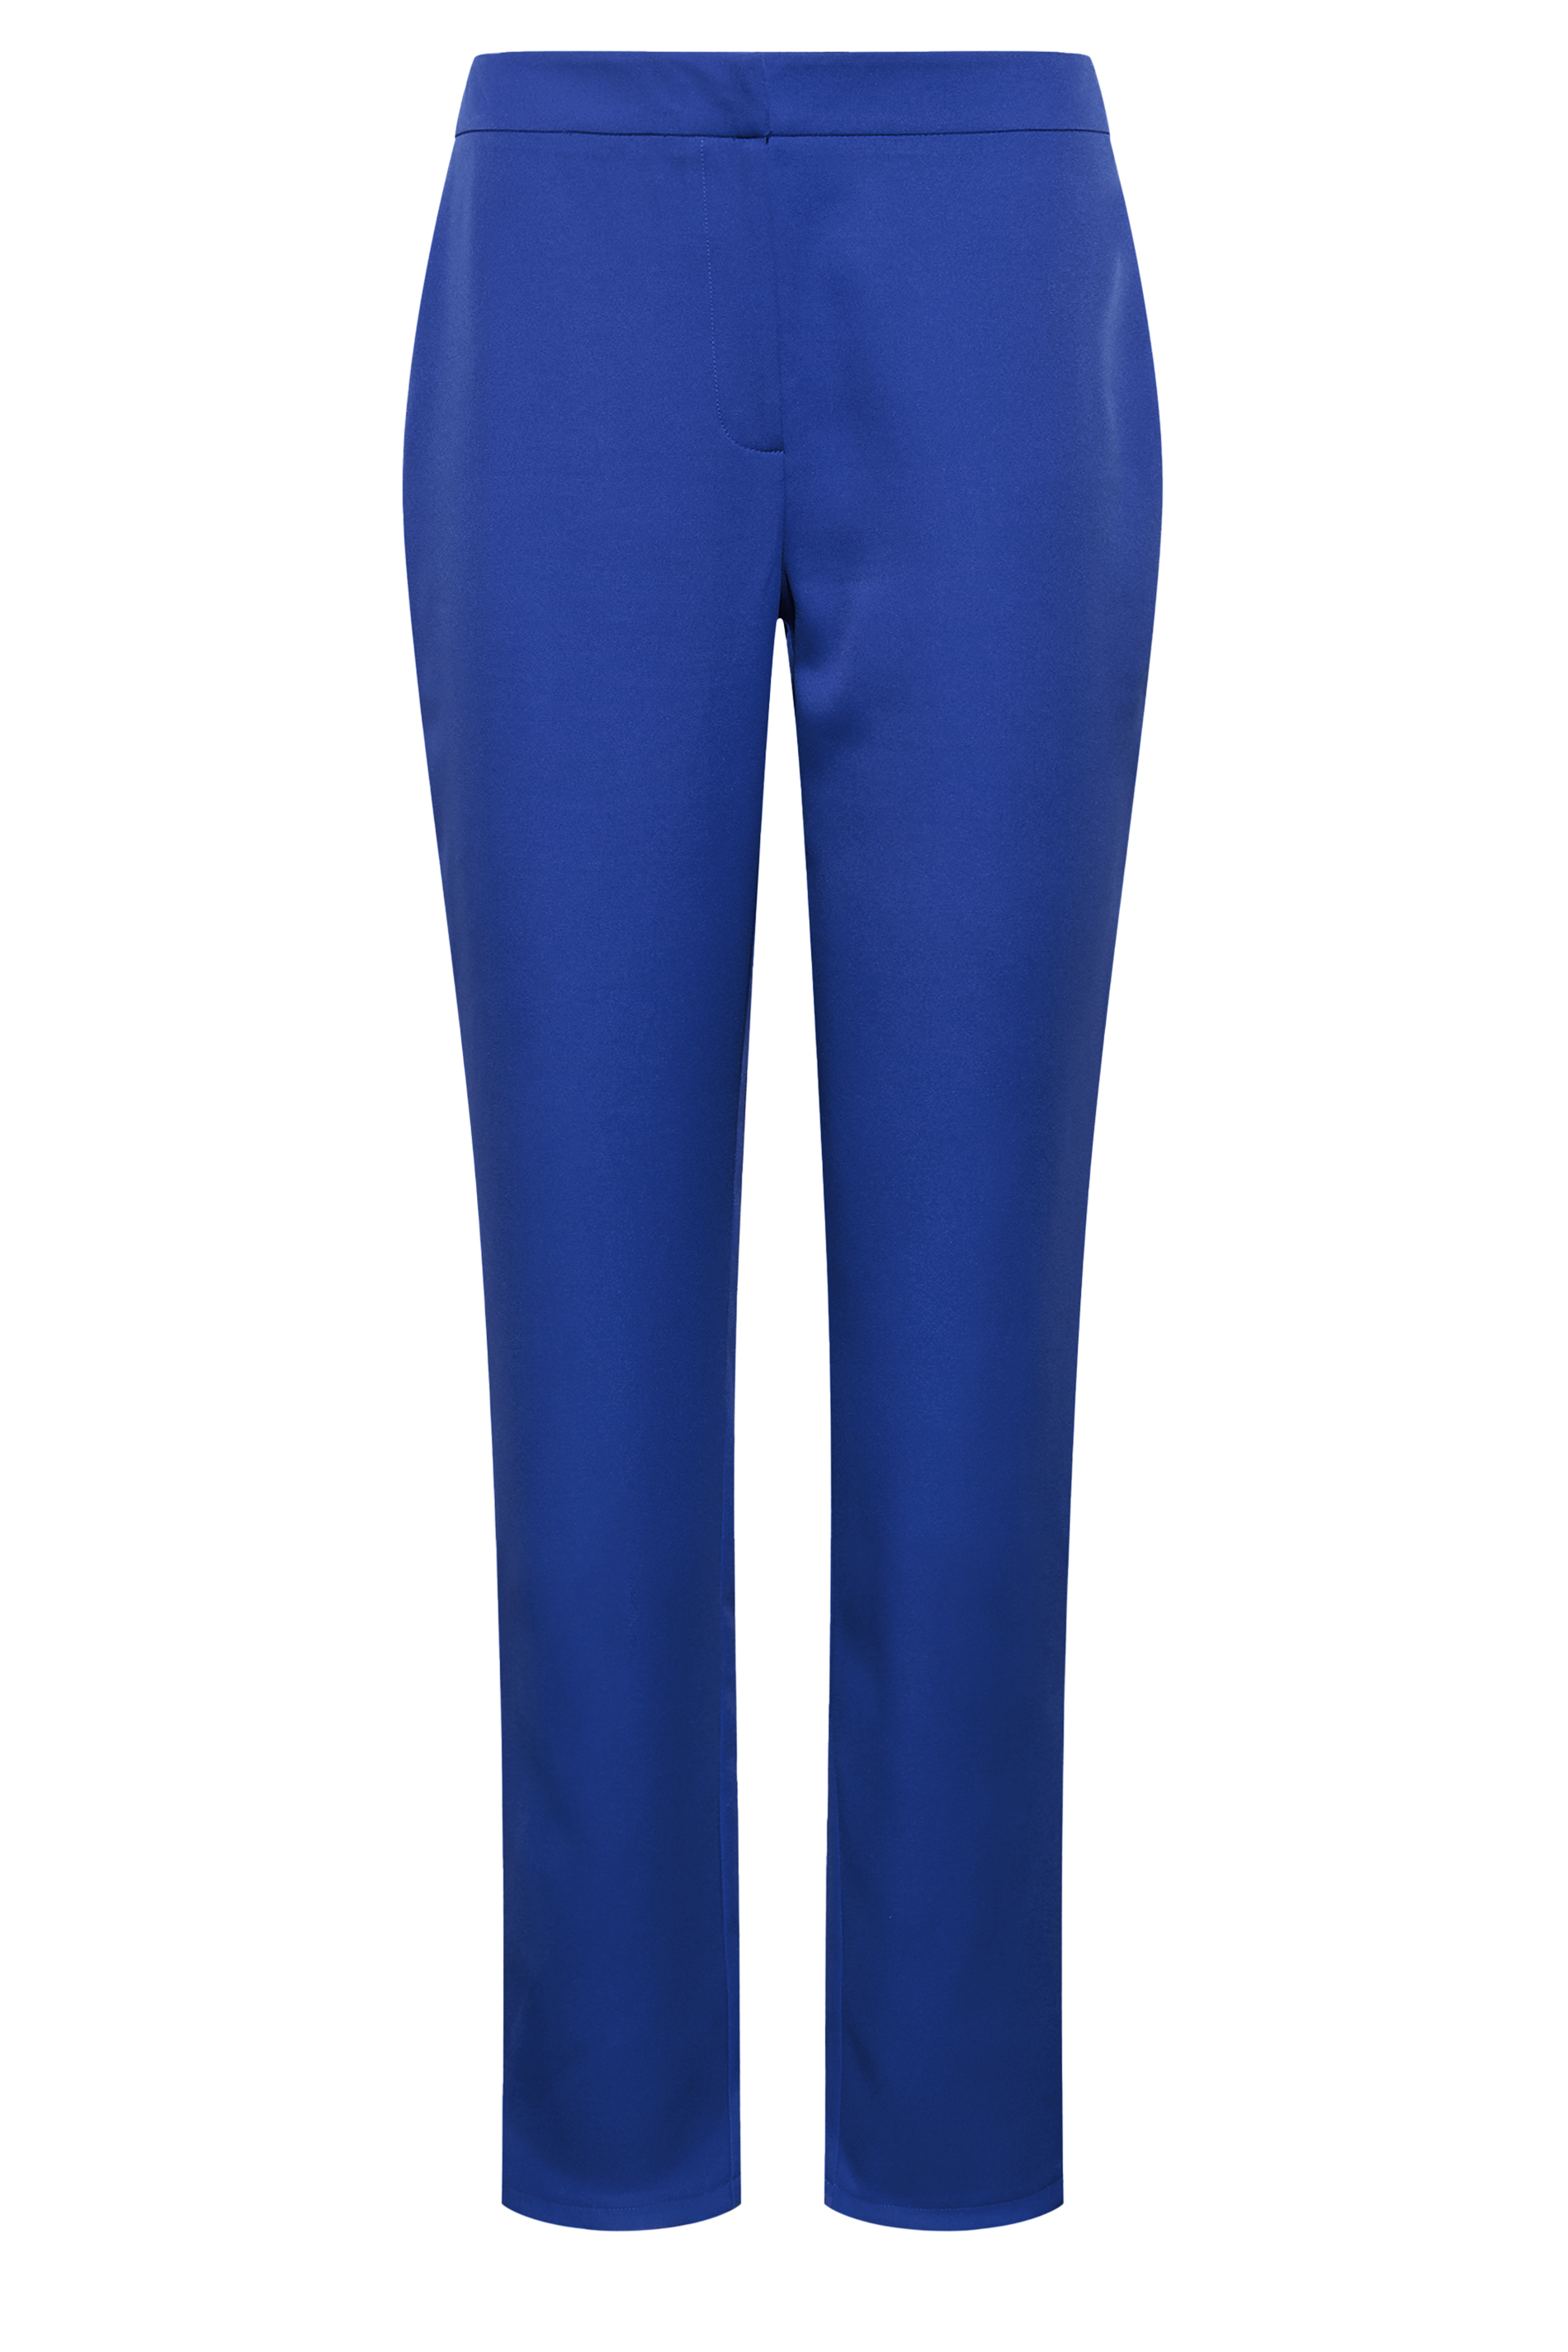 PixieGirl Indigo Blue Skinny Stretch AVA Jeans Petite : :  Fashion